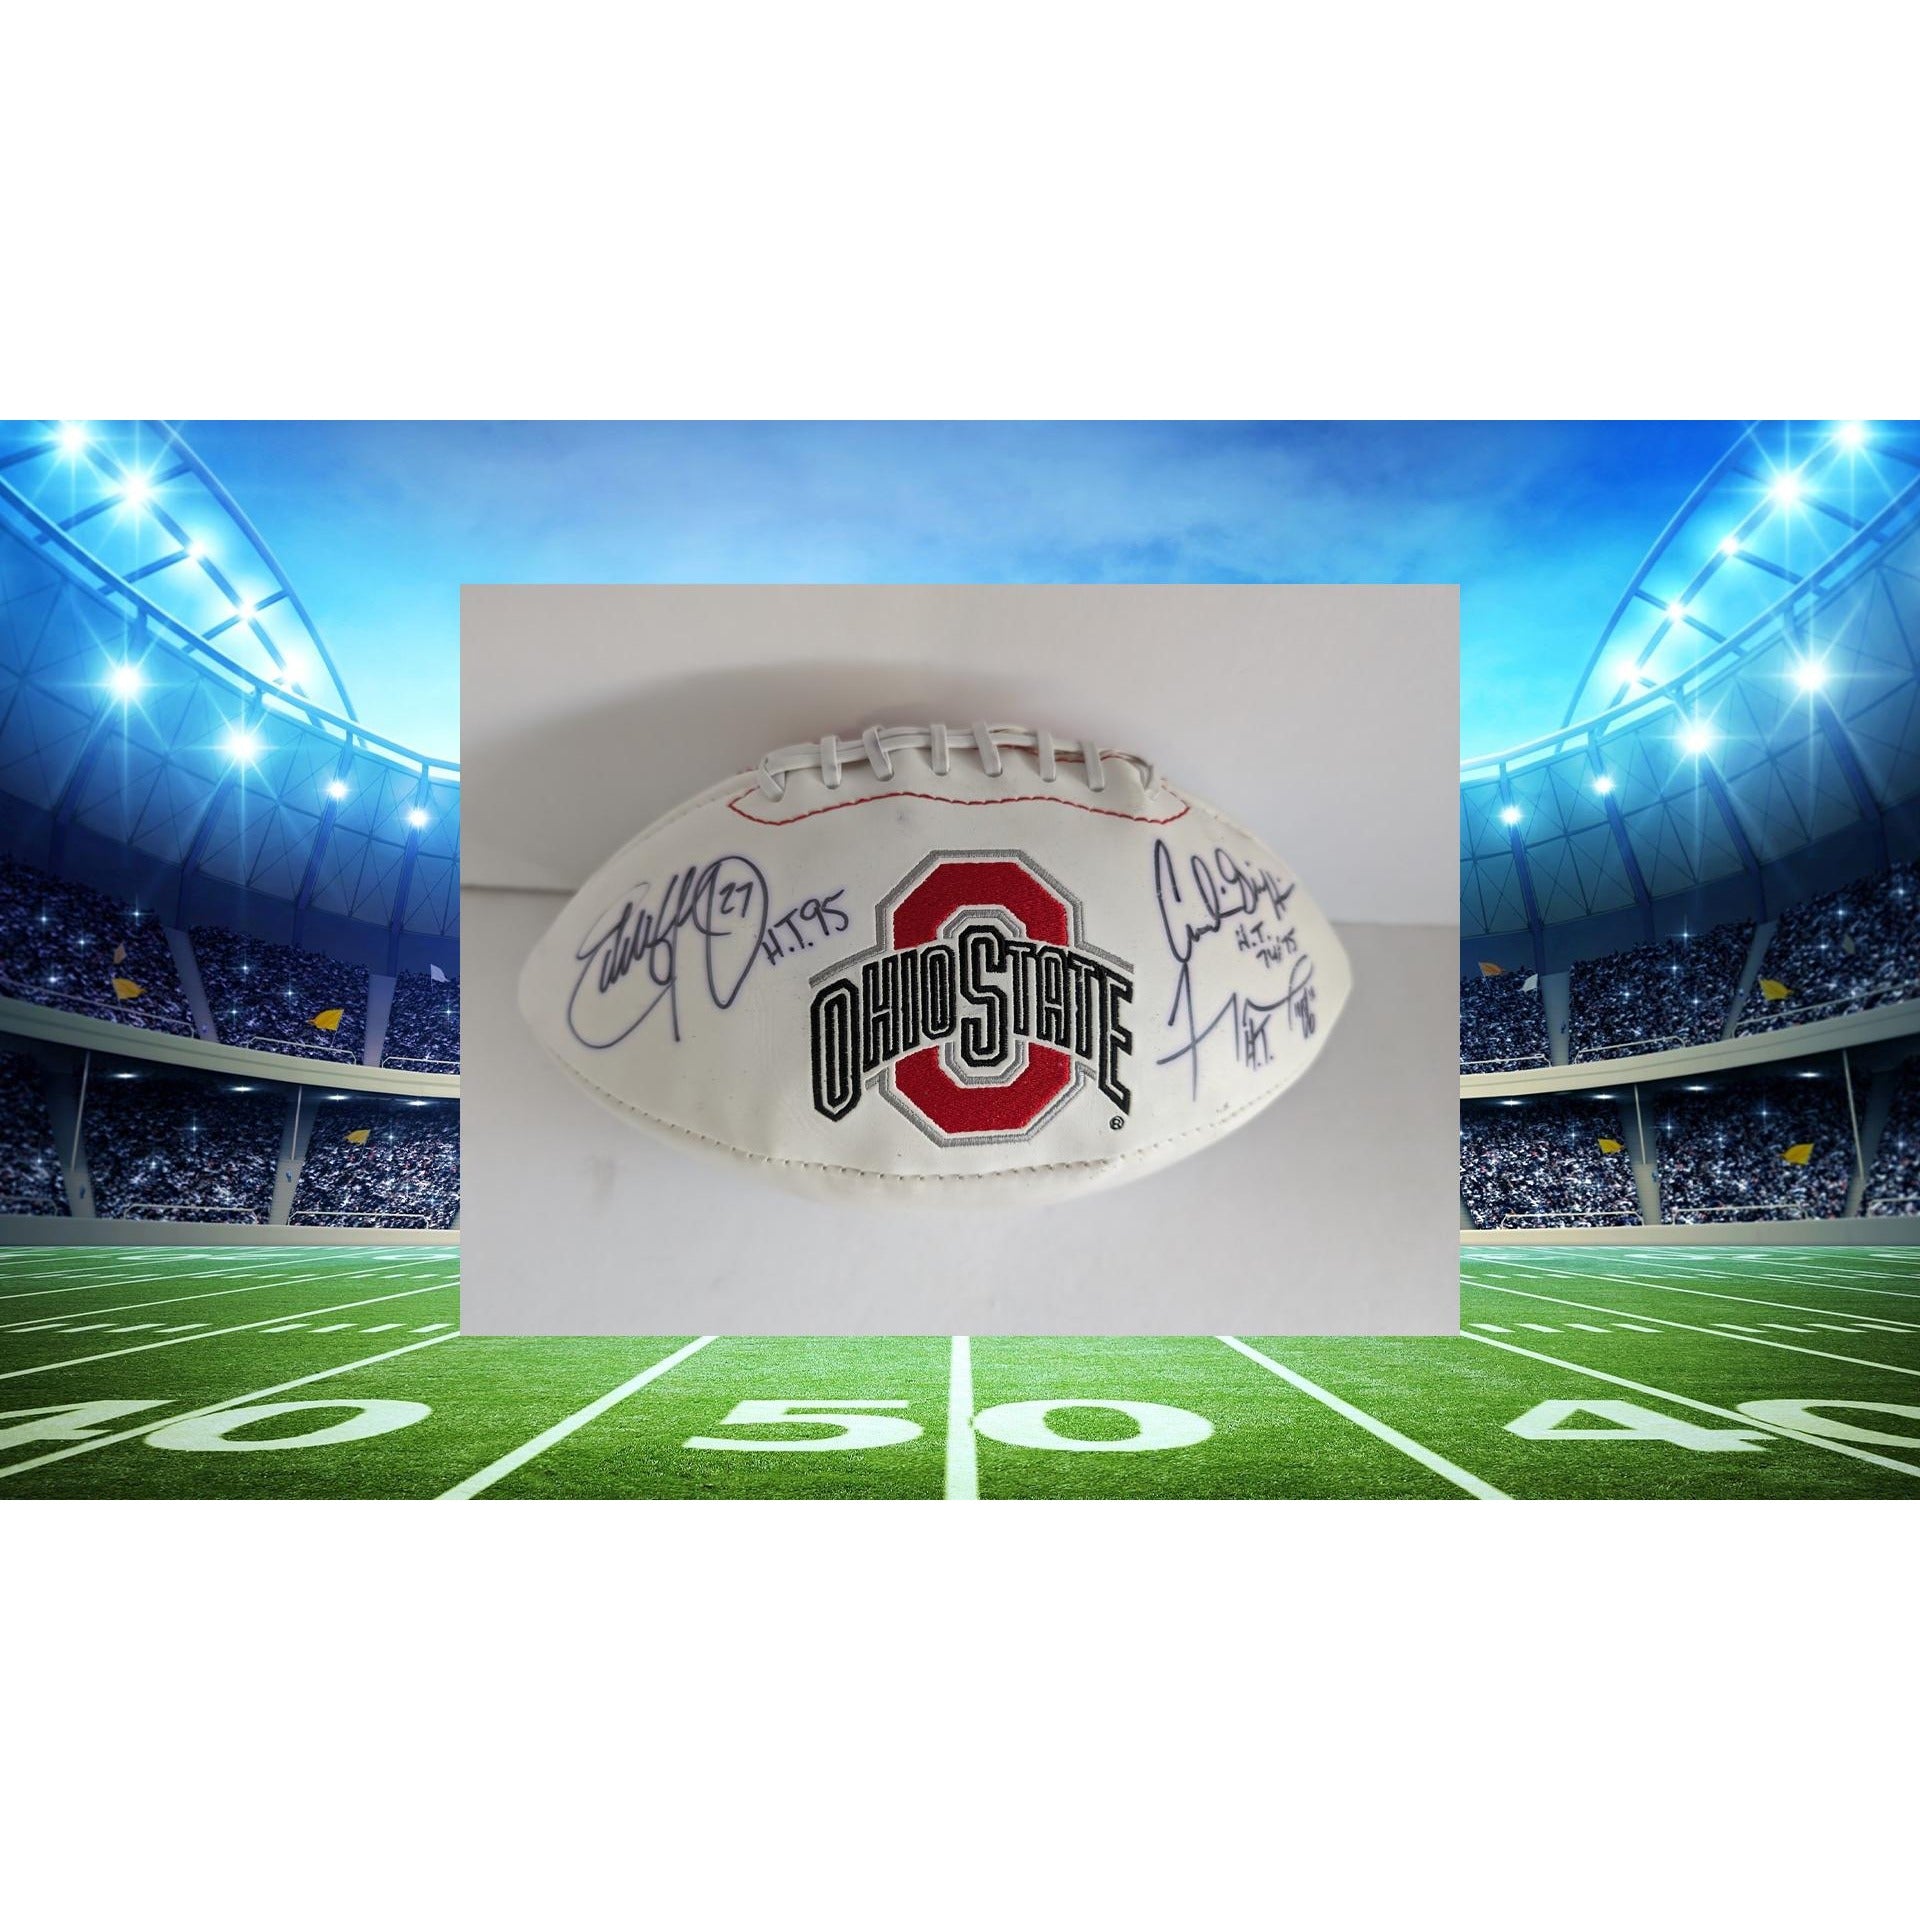 Ohio State Buckeyes Heisman Trophy award winners Archie Griffin Eddie George Troy Smith full size football signed